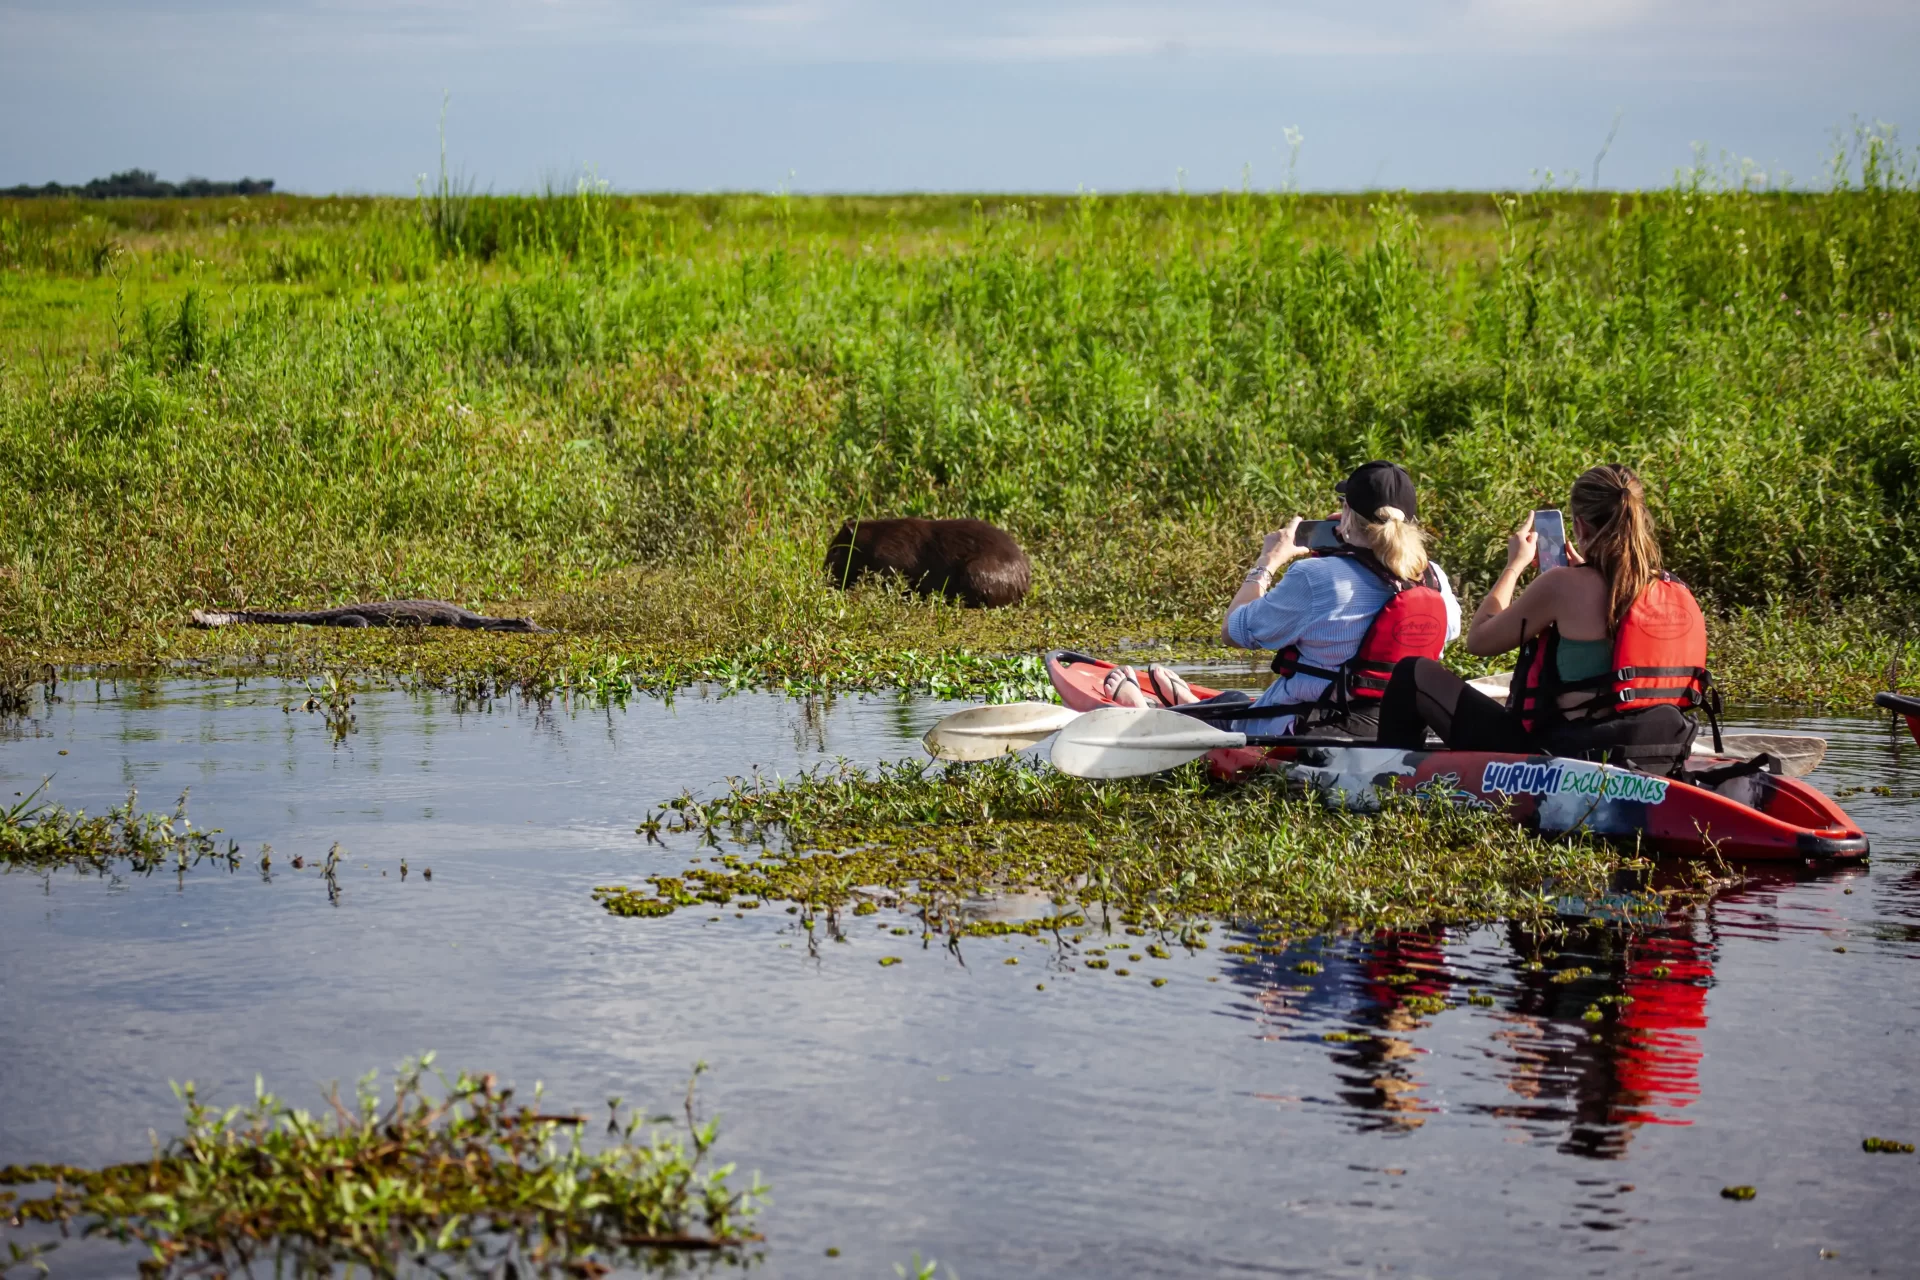 kayaking in the esteros del ibera